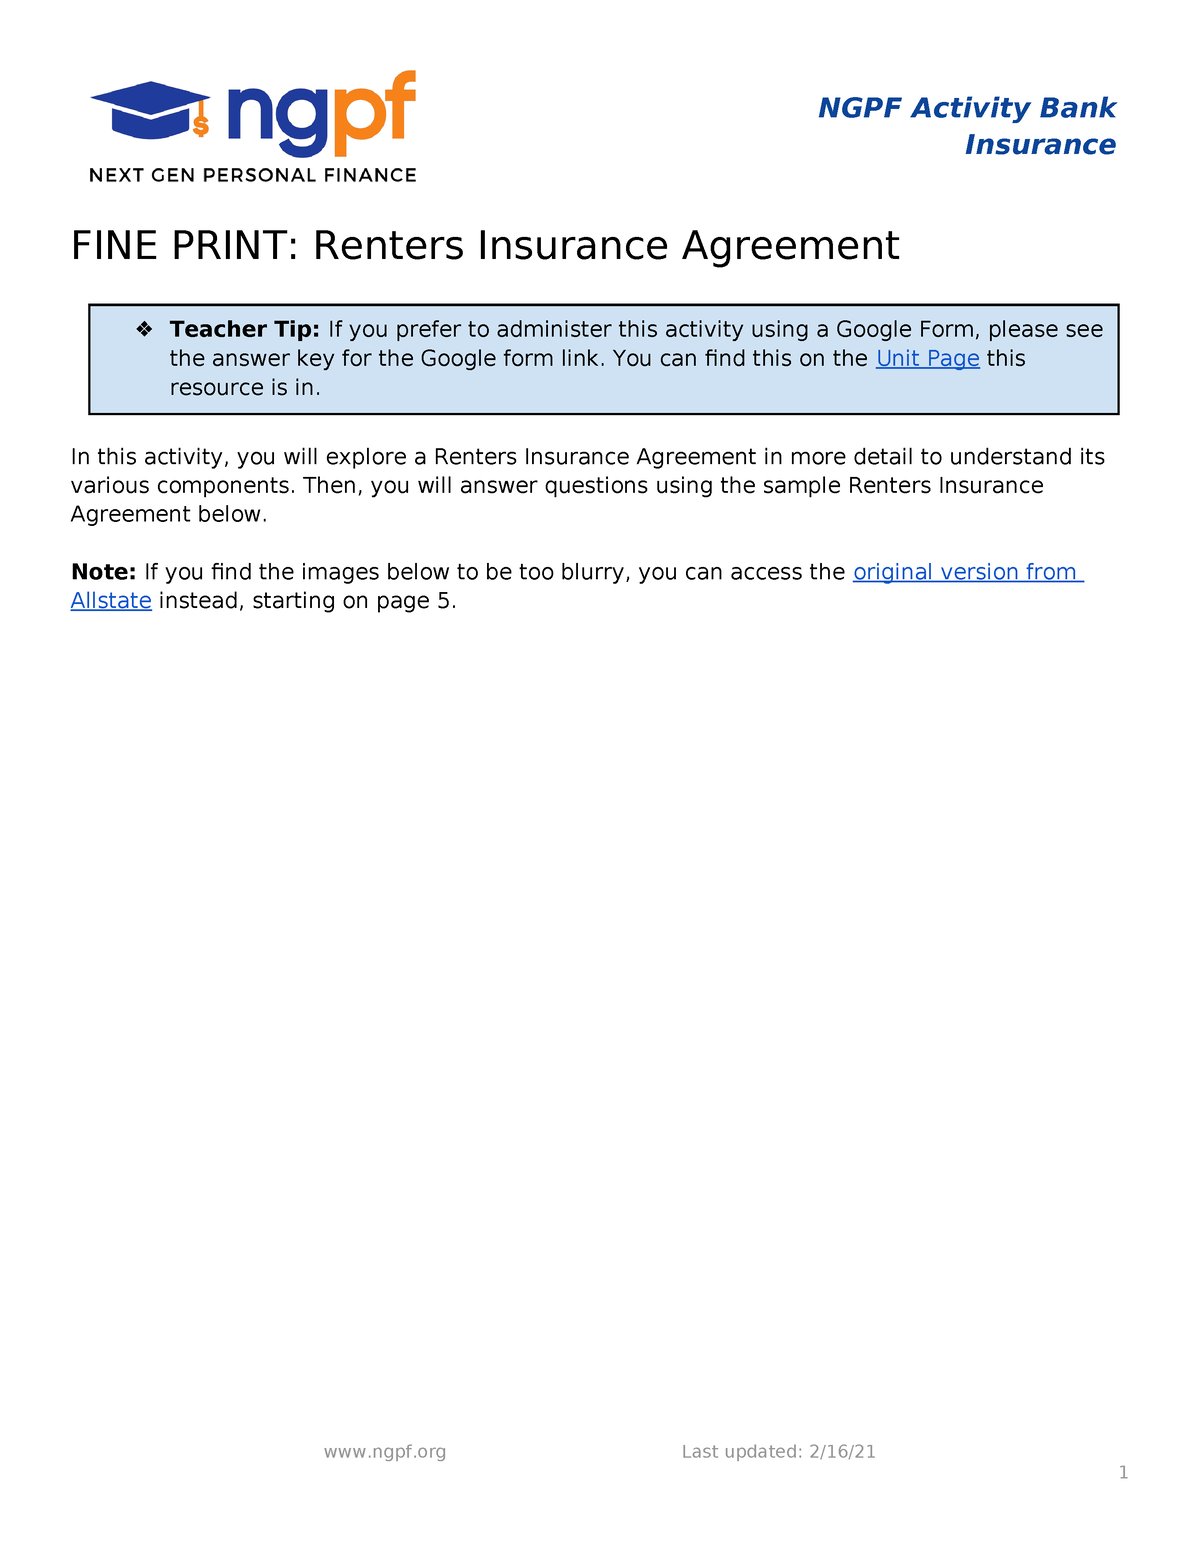 FINE Print Renters Insurance Agreement - NGPF Activity Bank Insurance FINE  PRINT: Renters Insurance - Studocu